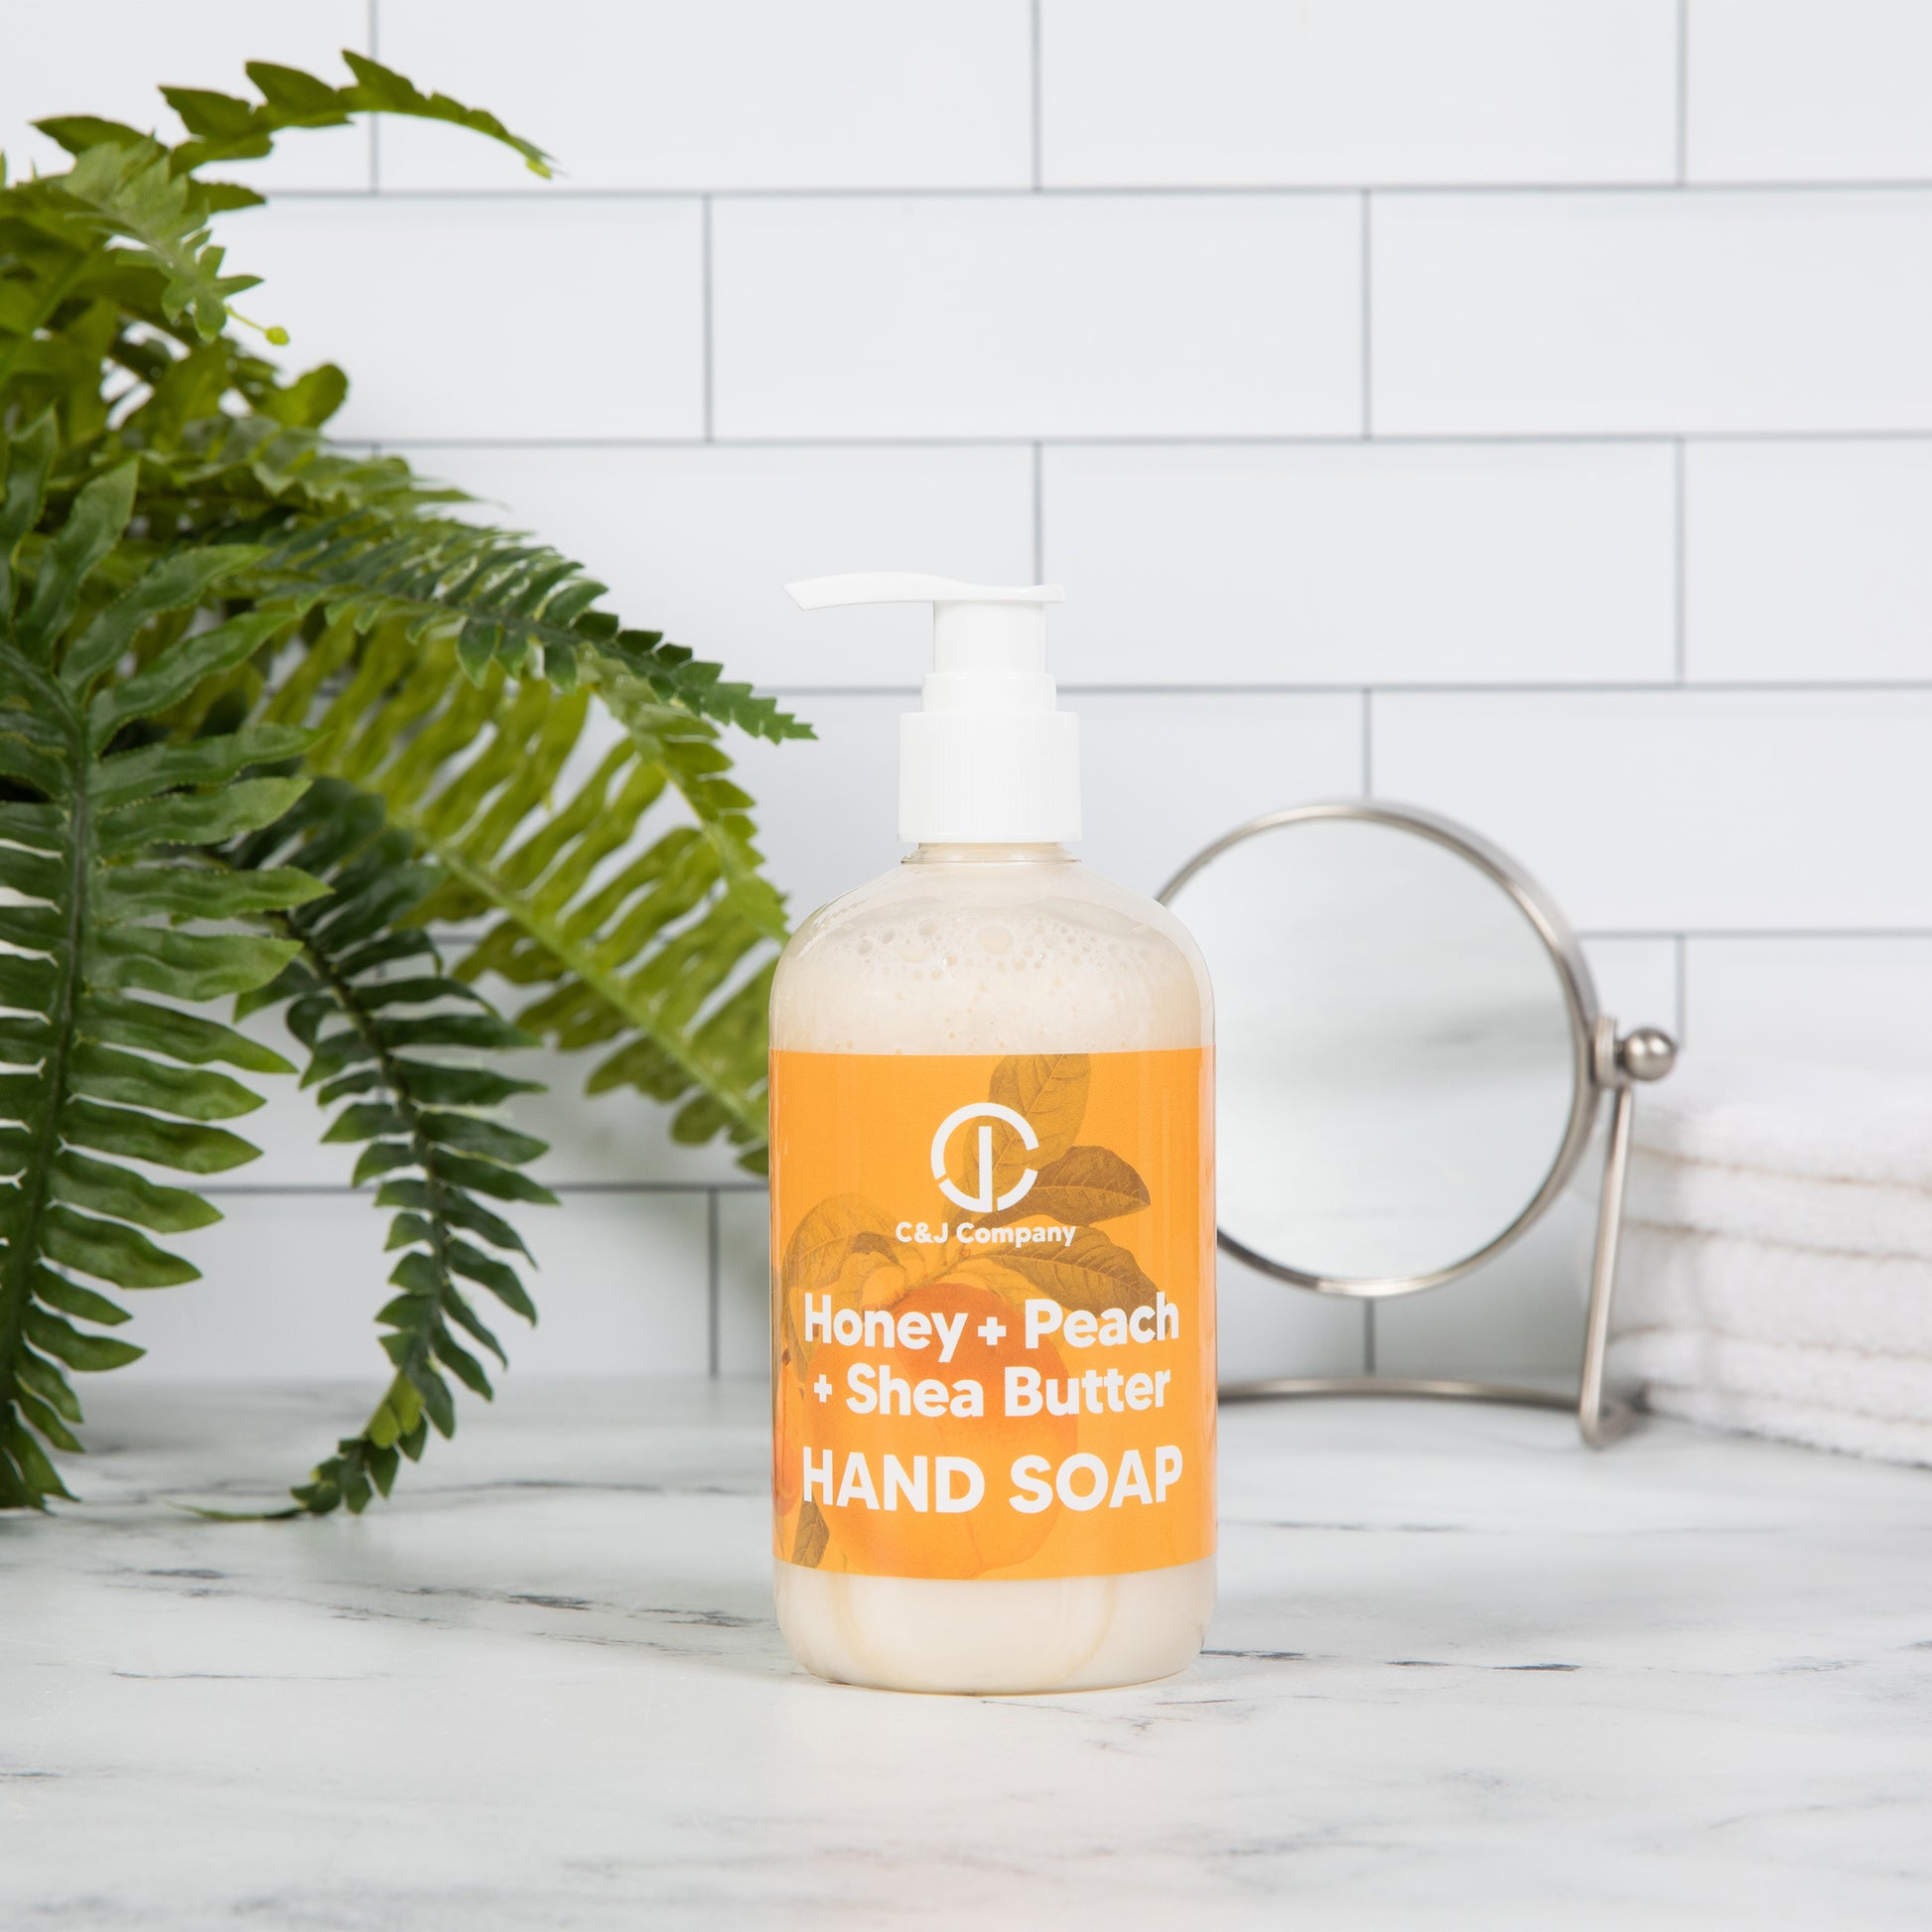 C&J Company Hand Soap, Made with Shea Butter, Honey + Peace ,Moisturizing Hand Wash, All Natural, Alcohol-Free, Cruelty-Free, 12oz - Cureton & Johnson